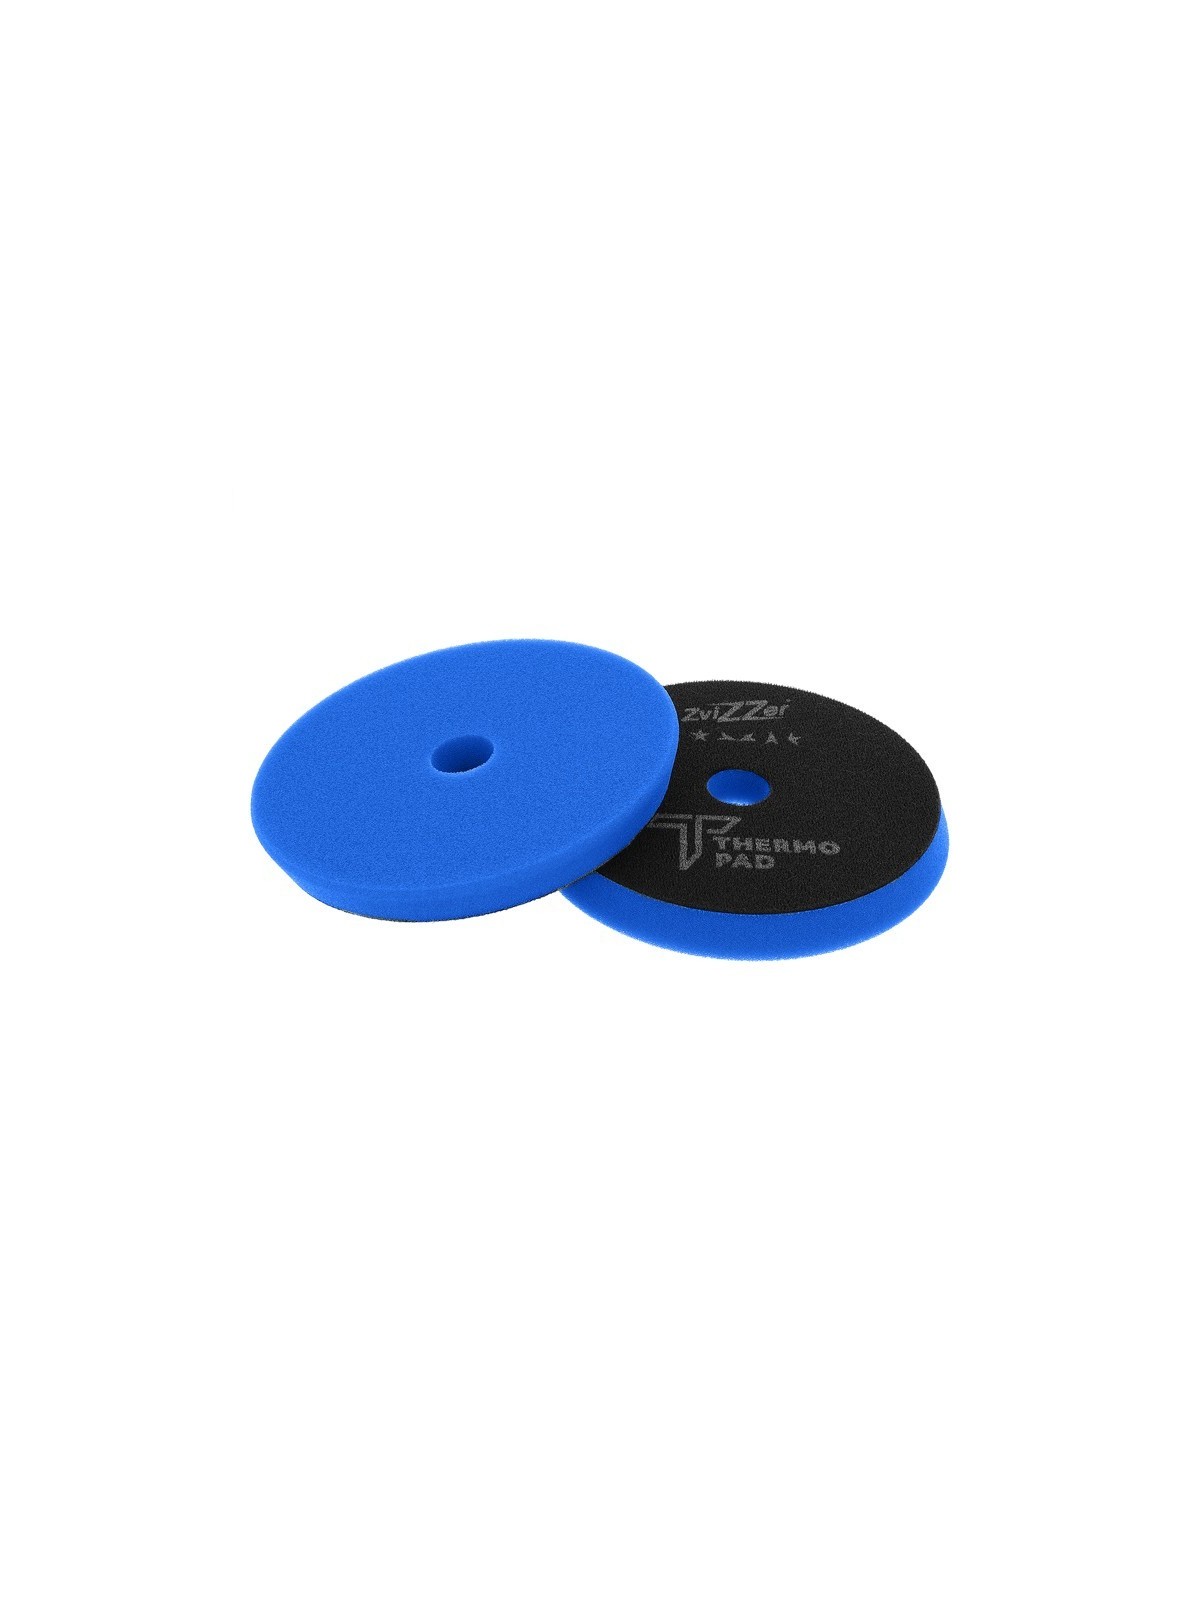 ZviZZer Thermo Pad Blue Medium Cut Polishing Pad